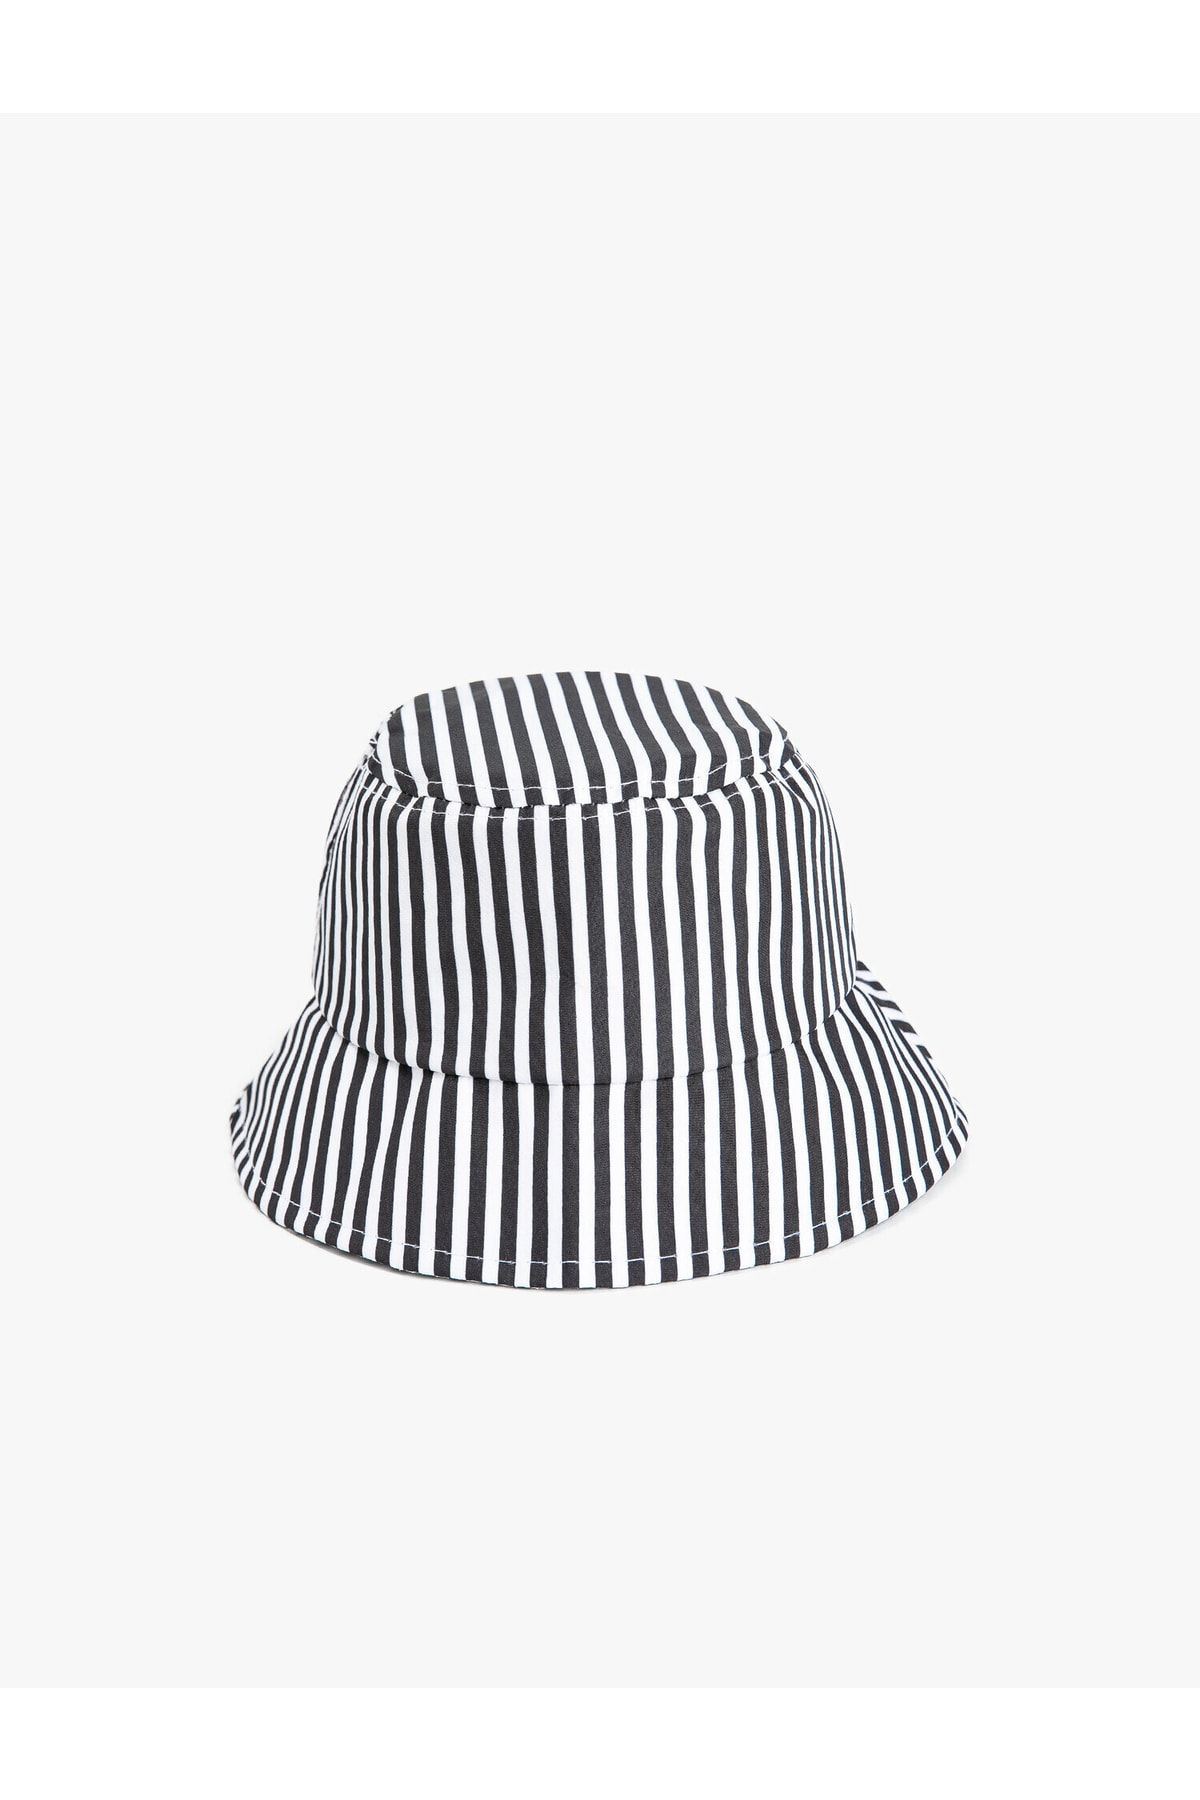 Koton Bucket Şapka